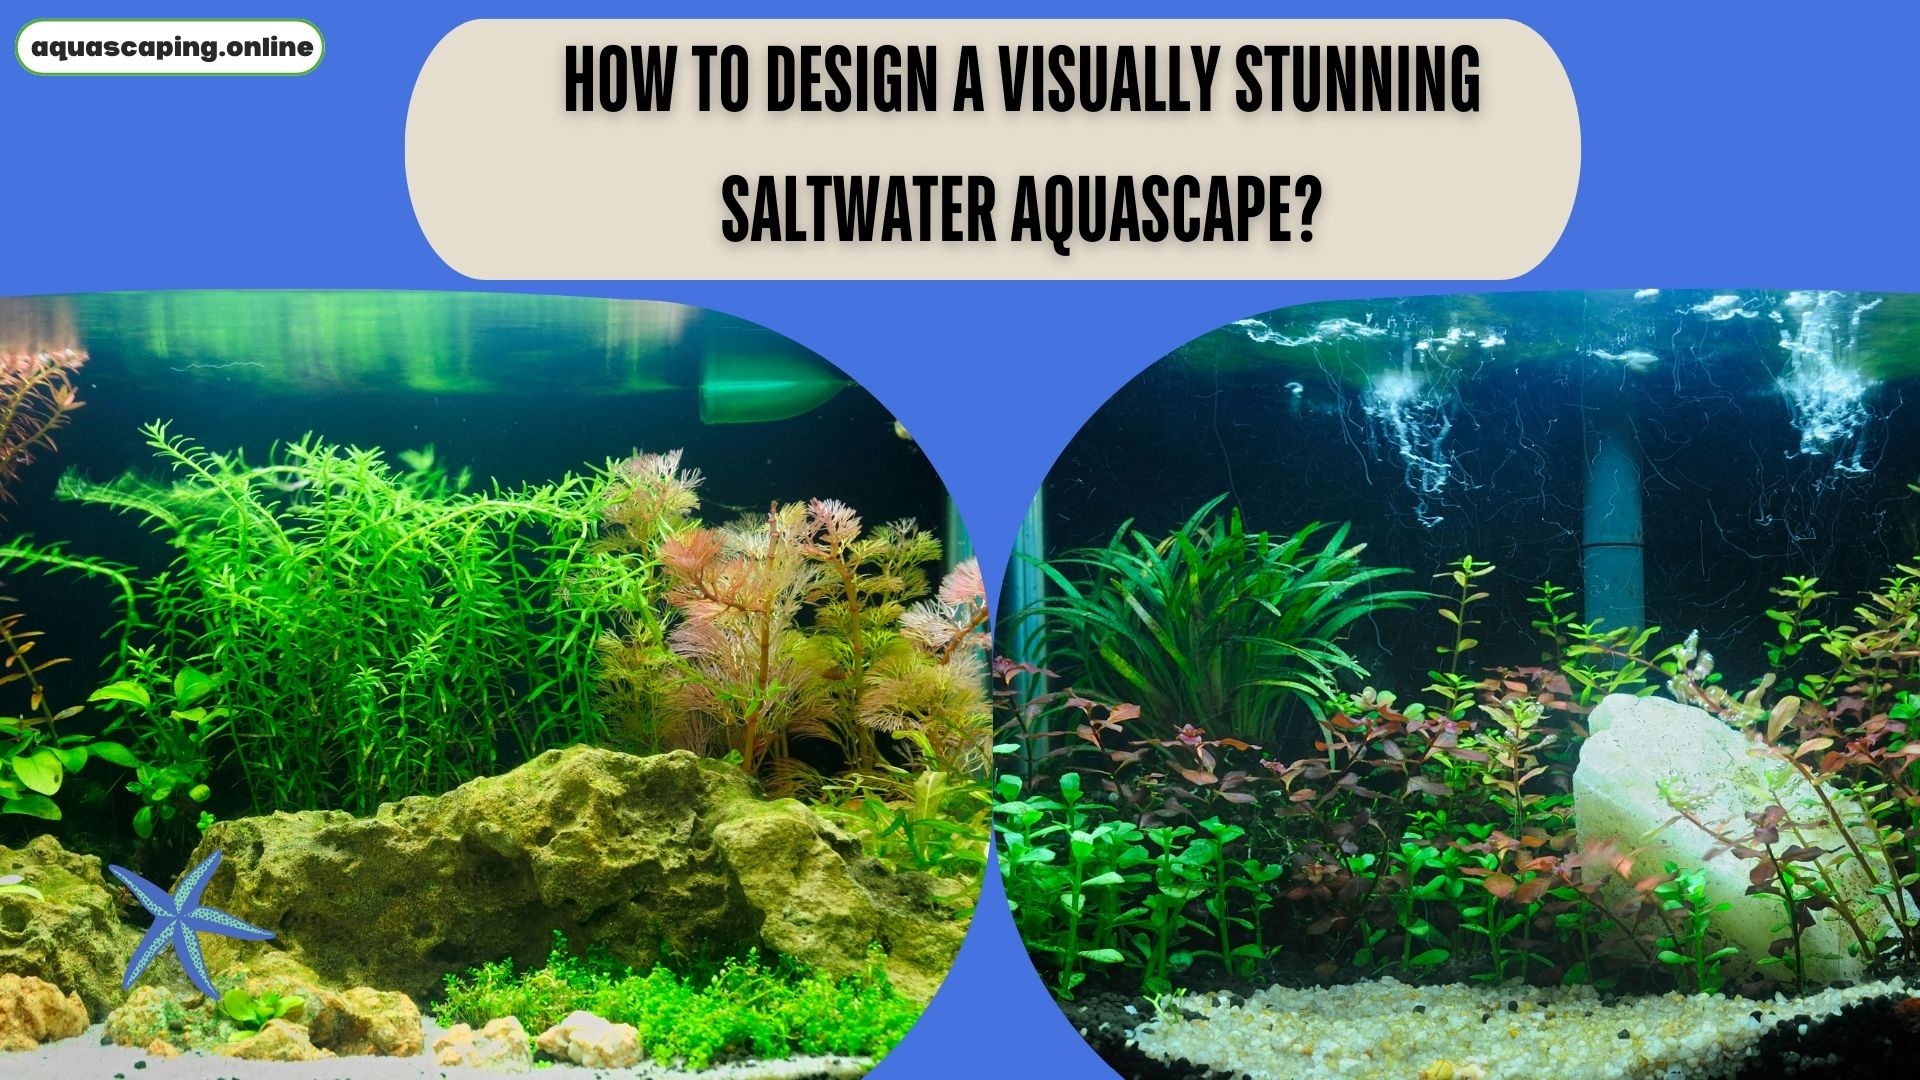 Design a visually stunning saltwater aquascape